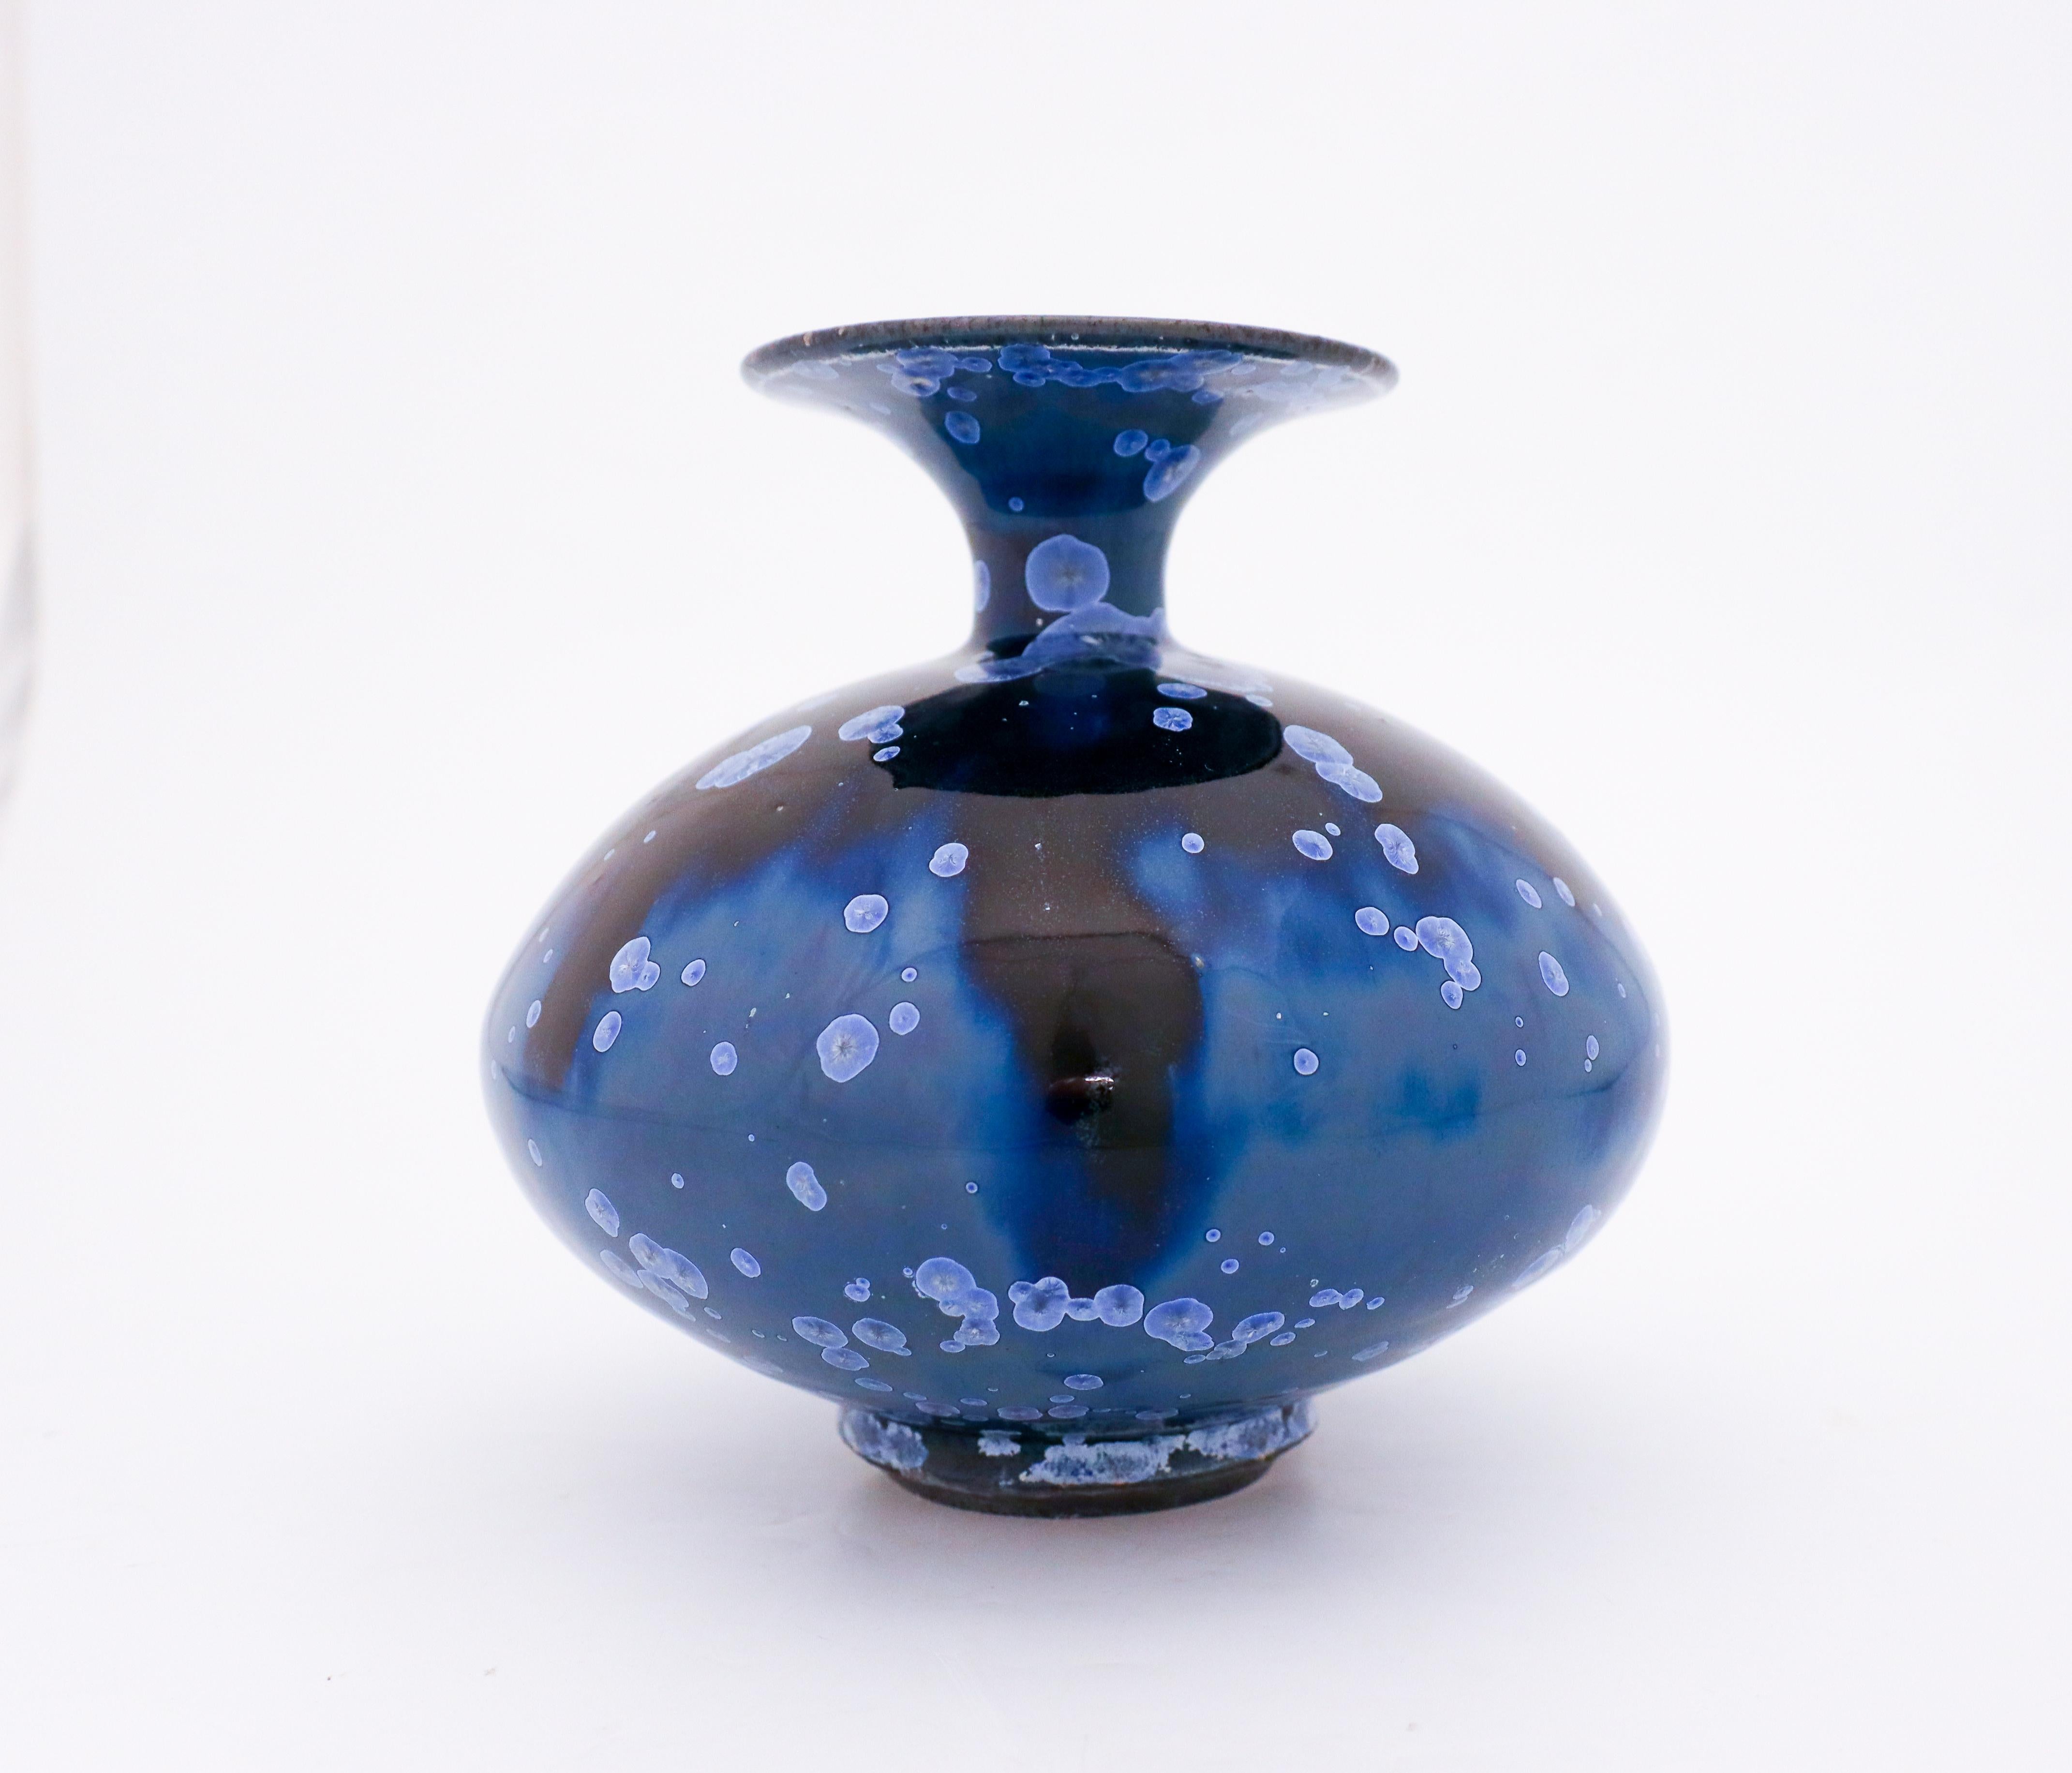 Scandinavian Modern Isak Isaksson, Black & Blue Crystalline Glaze, Contemporary Swedish Ceramicist